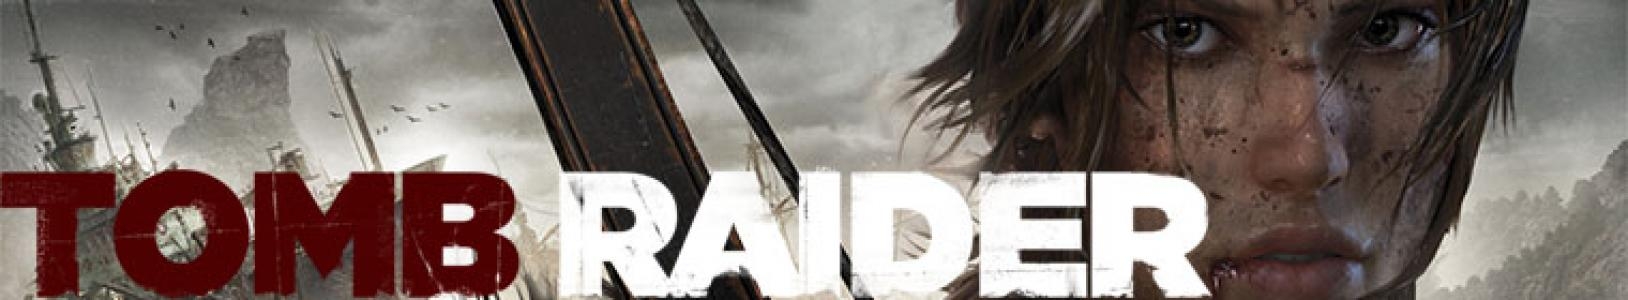 Tomb Raider banner